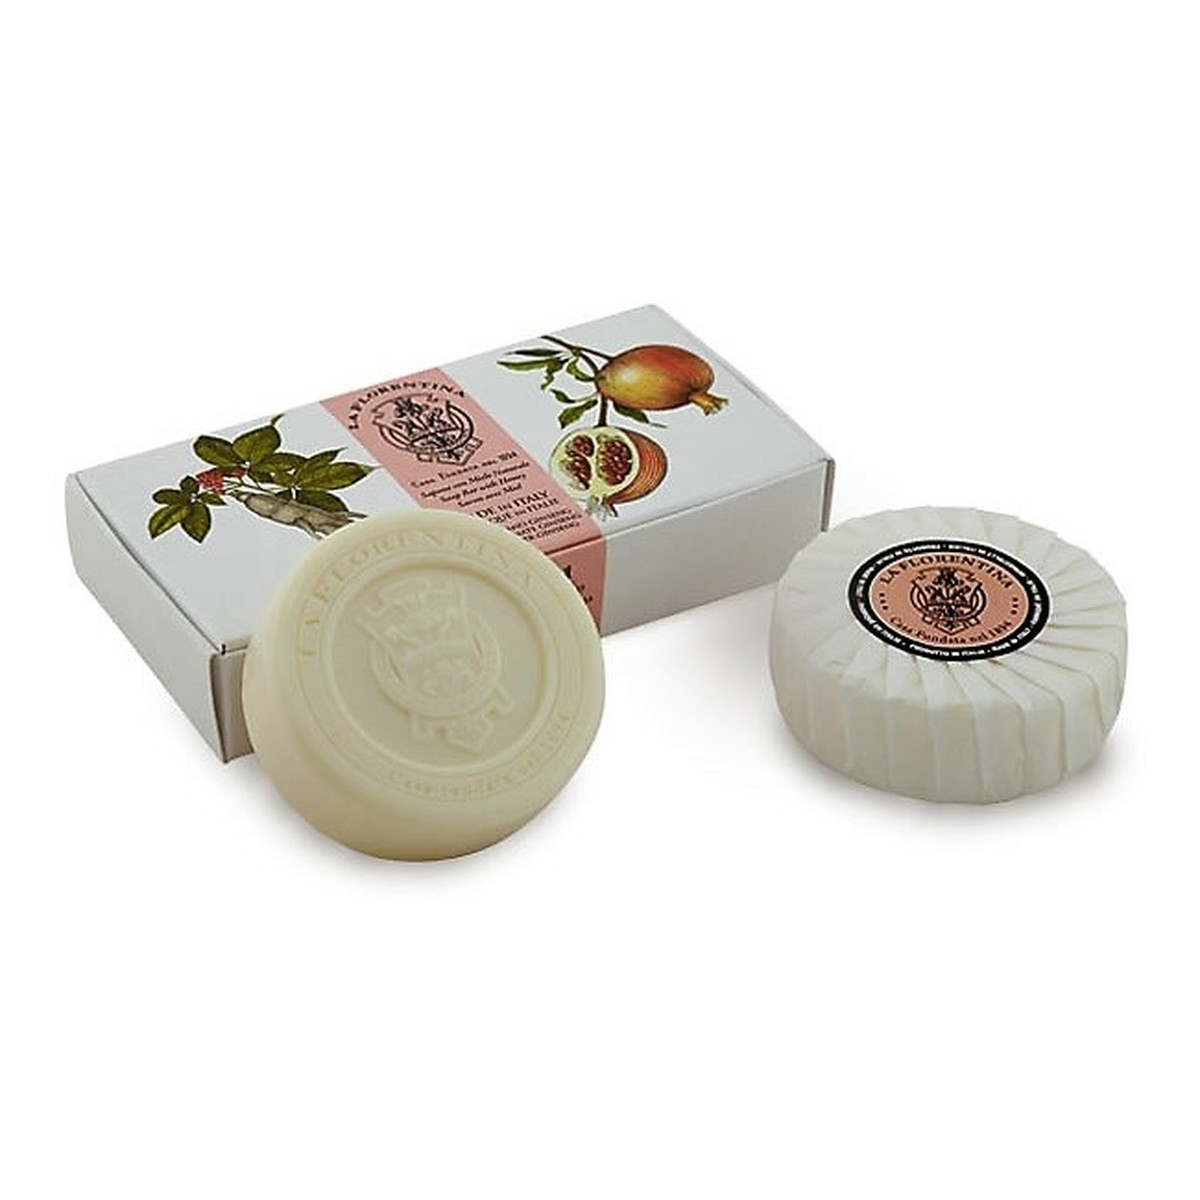 La Florentina Bath Soap zestaw mydeł do kąpieli Pomegranate & Ginseng 2x115g